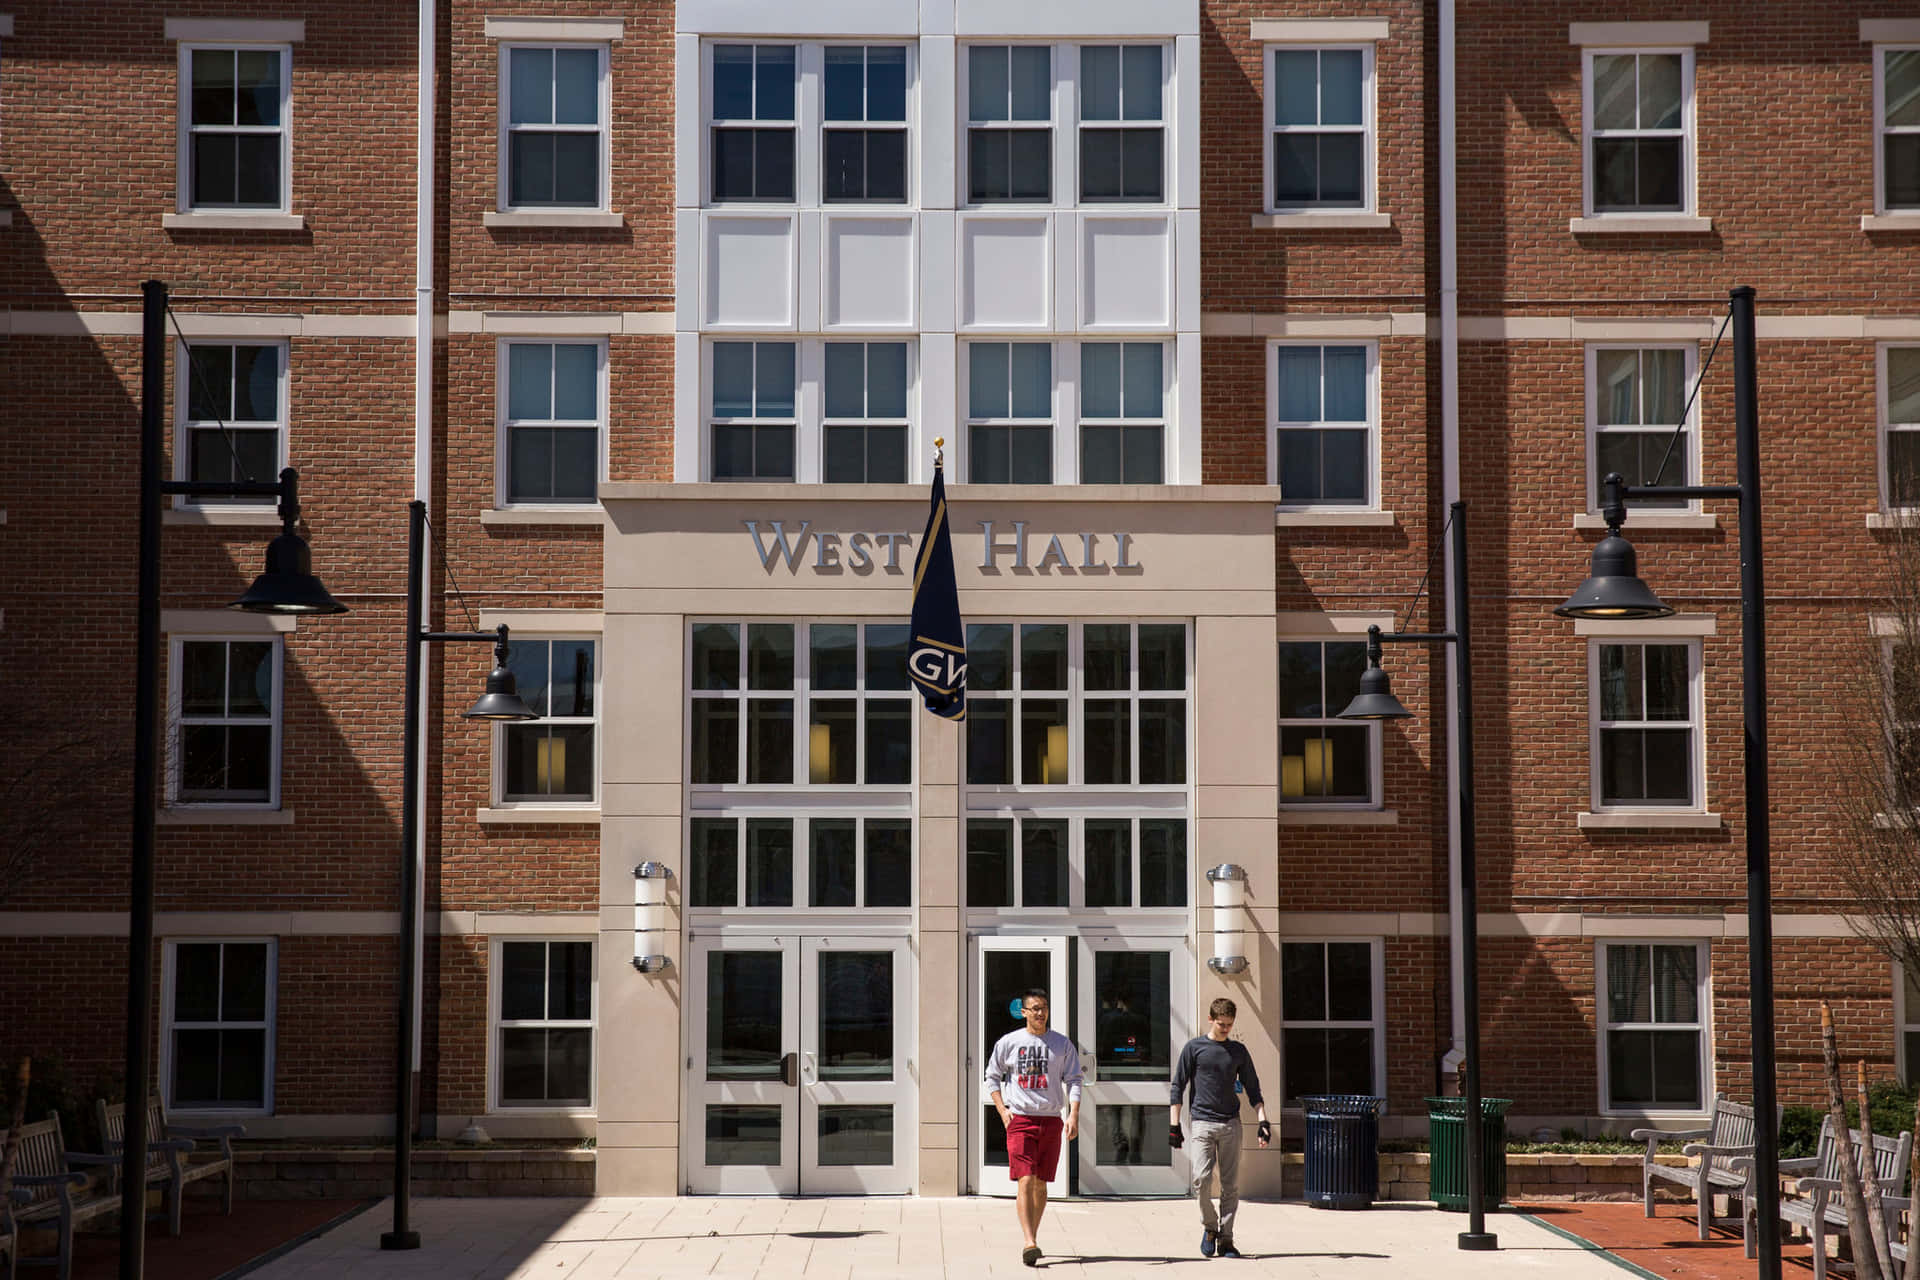 George Washington University West Hall Building Picture